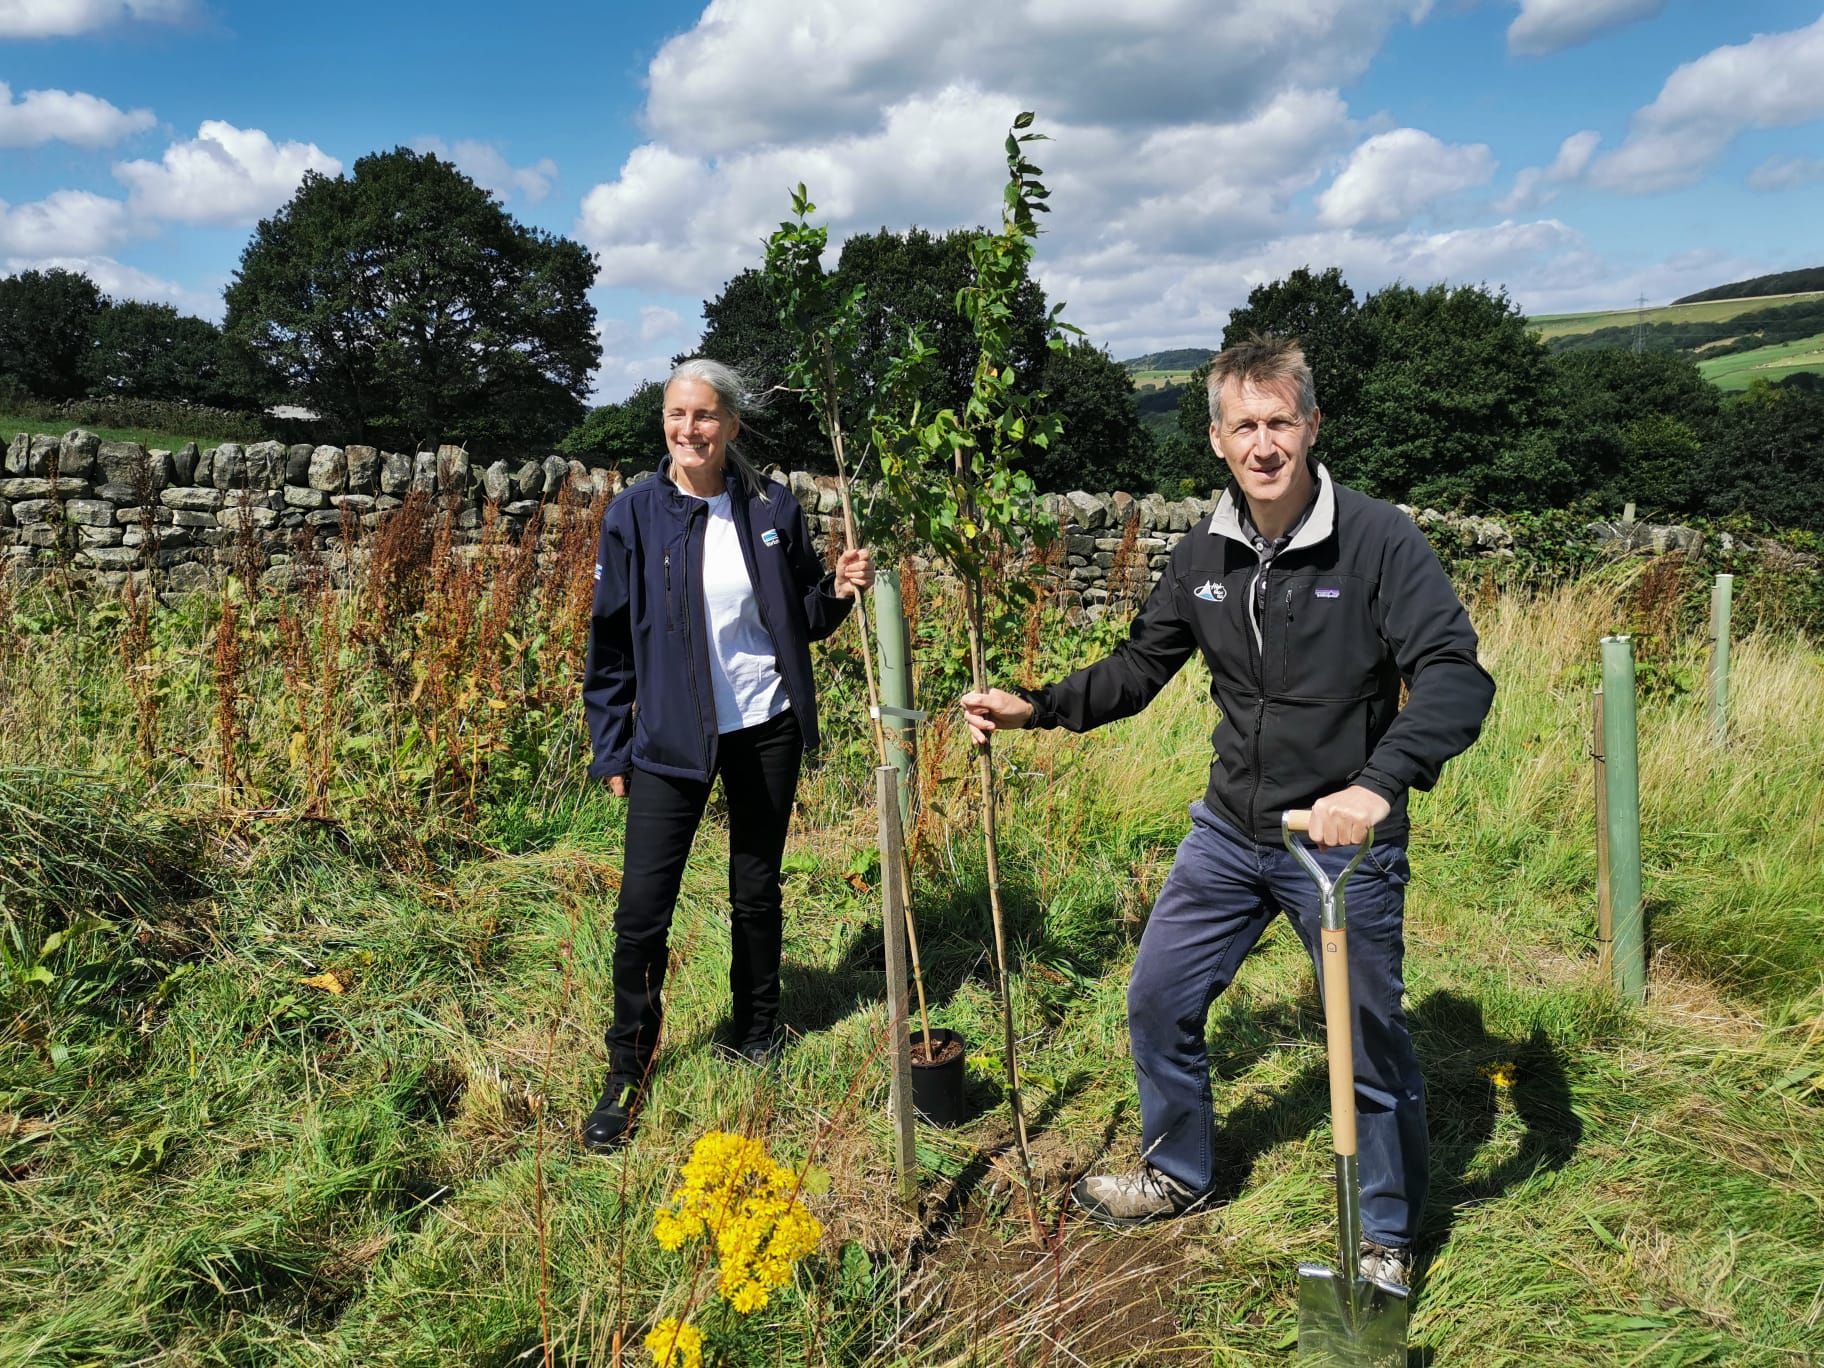 Yorkshire Water CEO Liz Barber and Dan Jarvis planting trees at Underbank reservoir